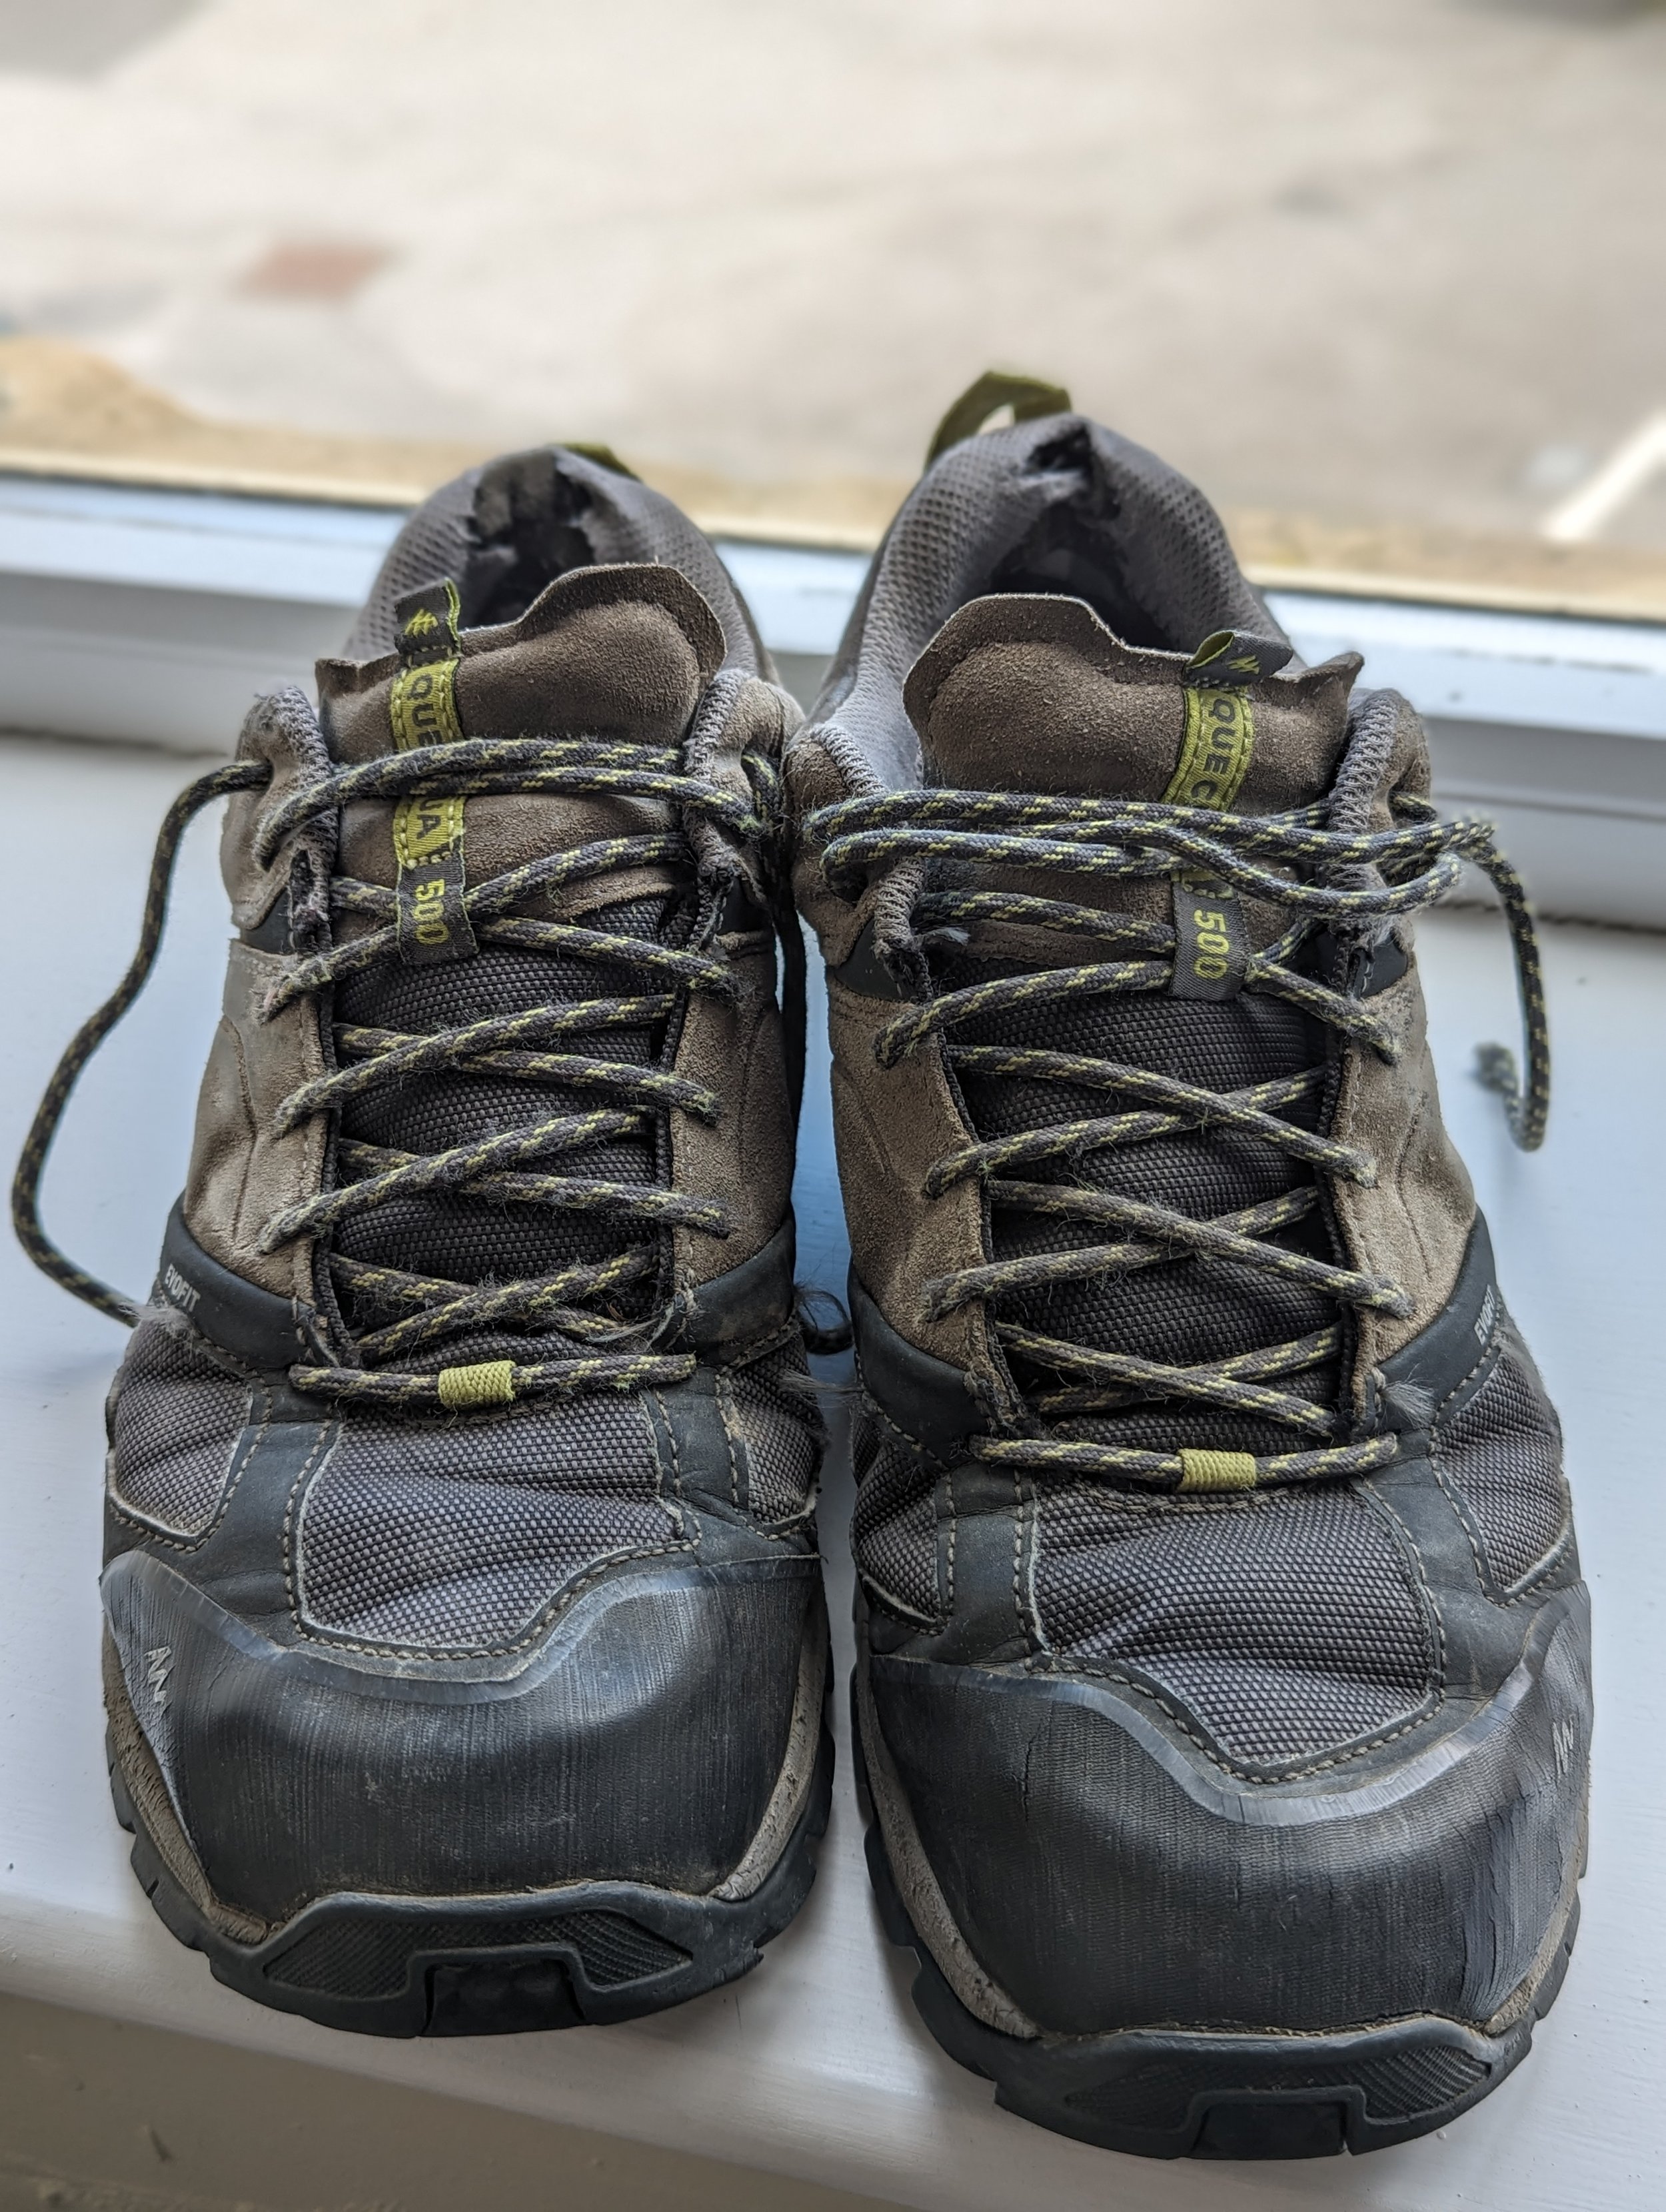 Decathlon Quechua Men's Waterproof Walking Shoes (MH500) long-term ...